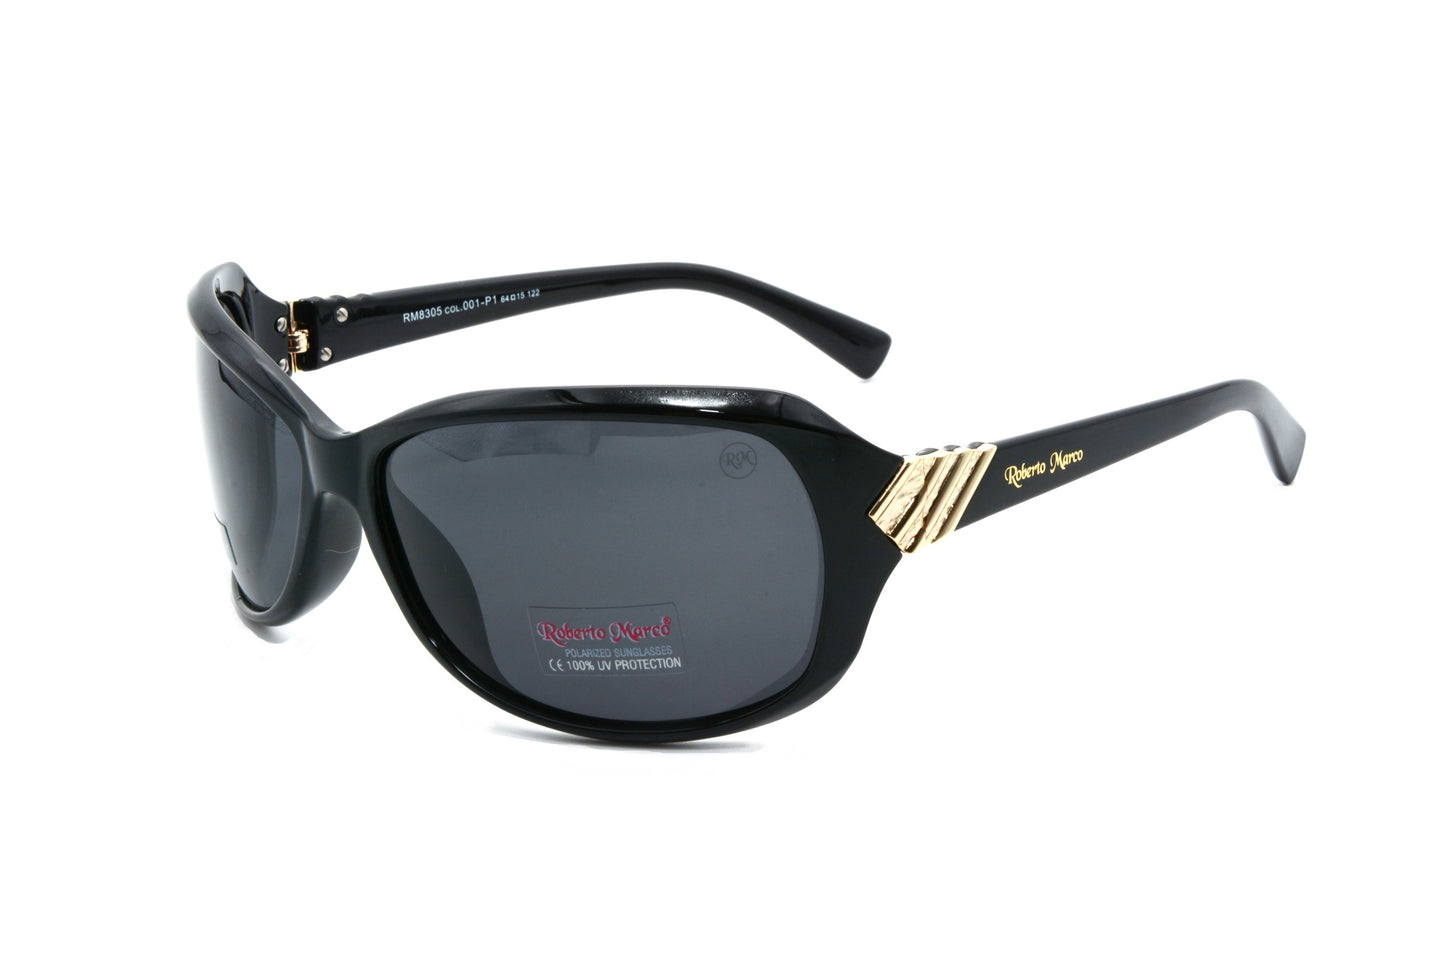    Roberto Marco sunglasses RM8305 001-P1